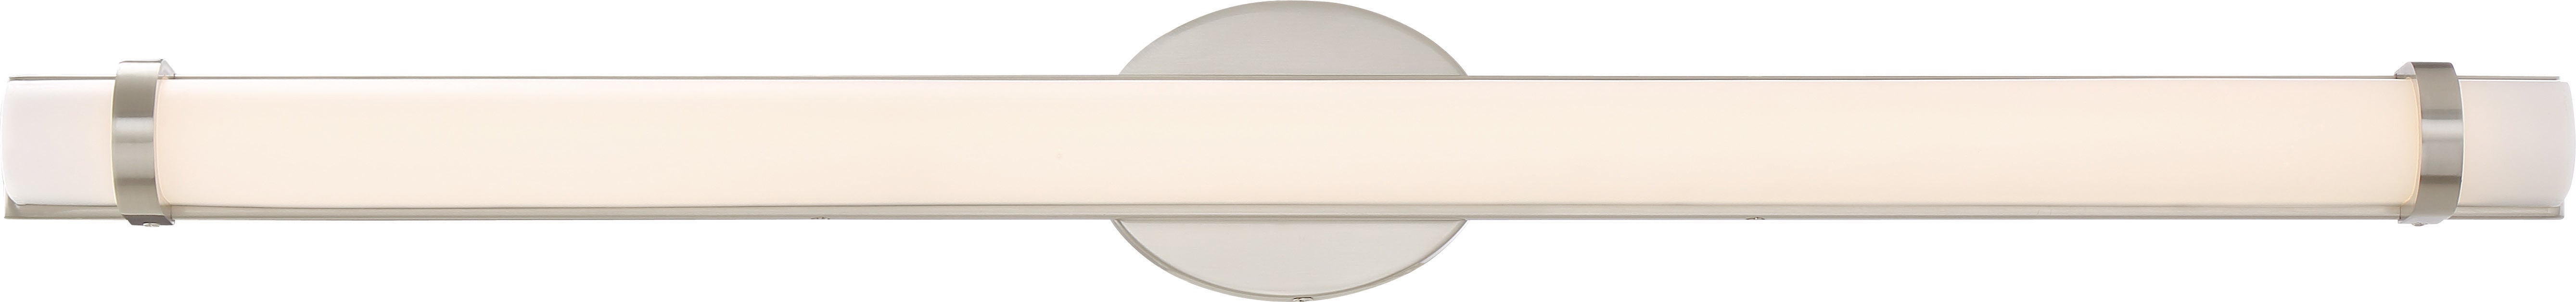 SATCO/NUVO Slice 36 Inch LED Wall Sconce Polished Nickel Finish White Acrylic Lens (62-935)